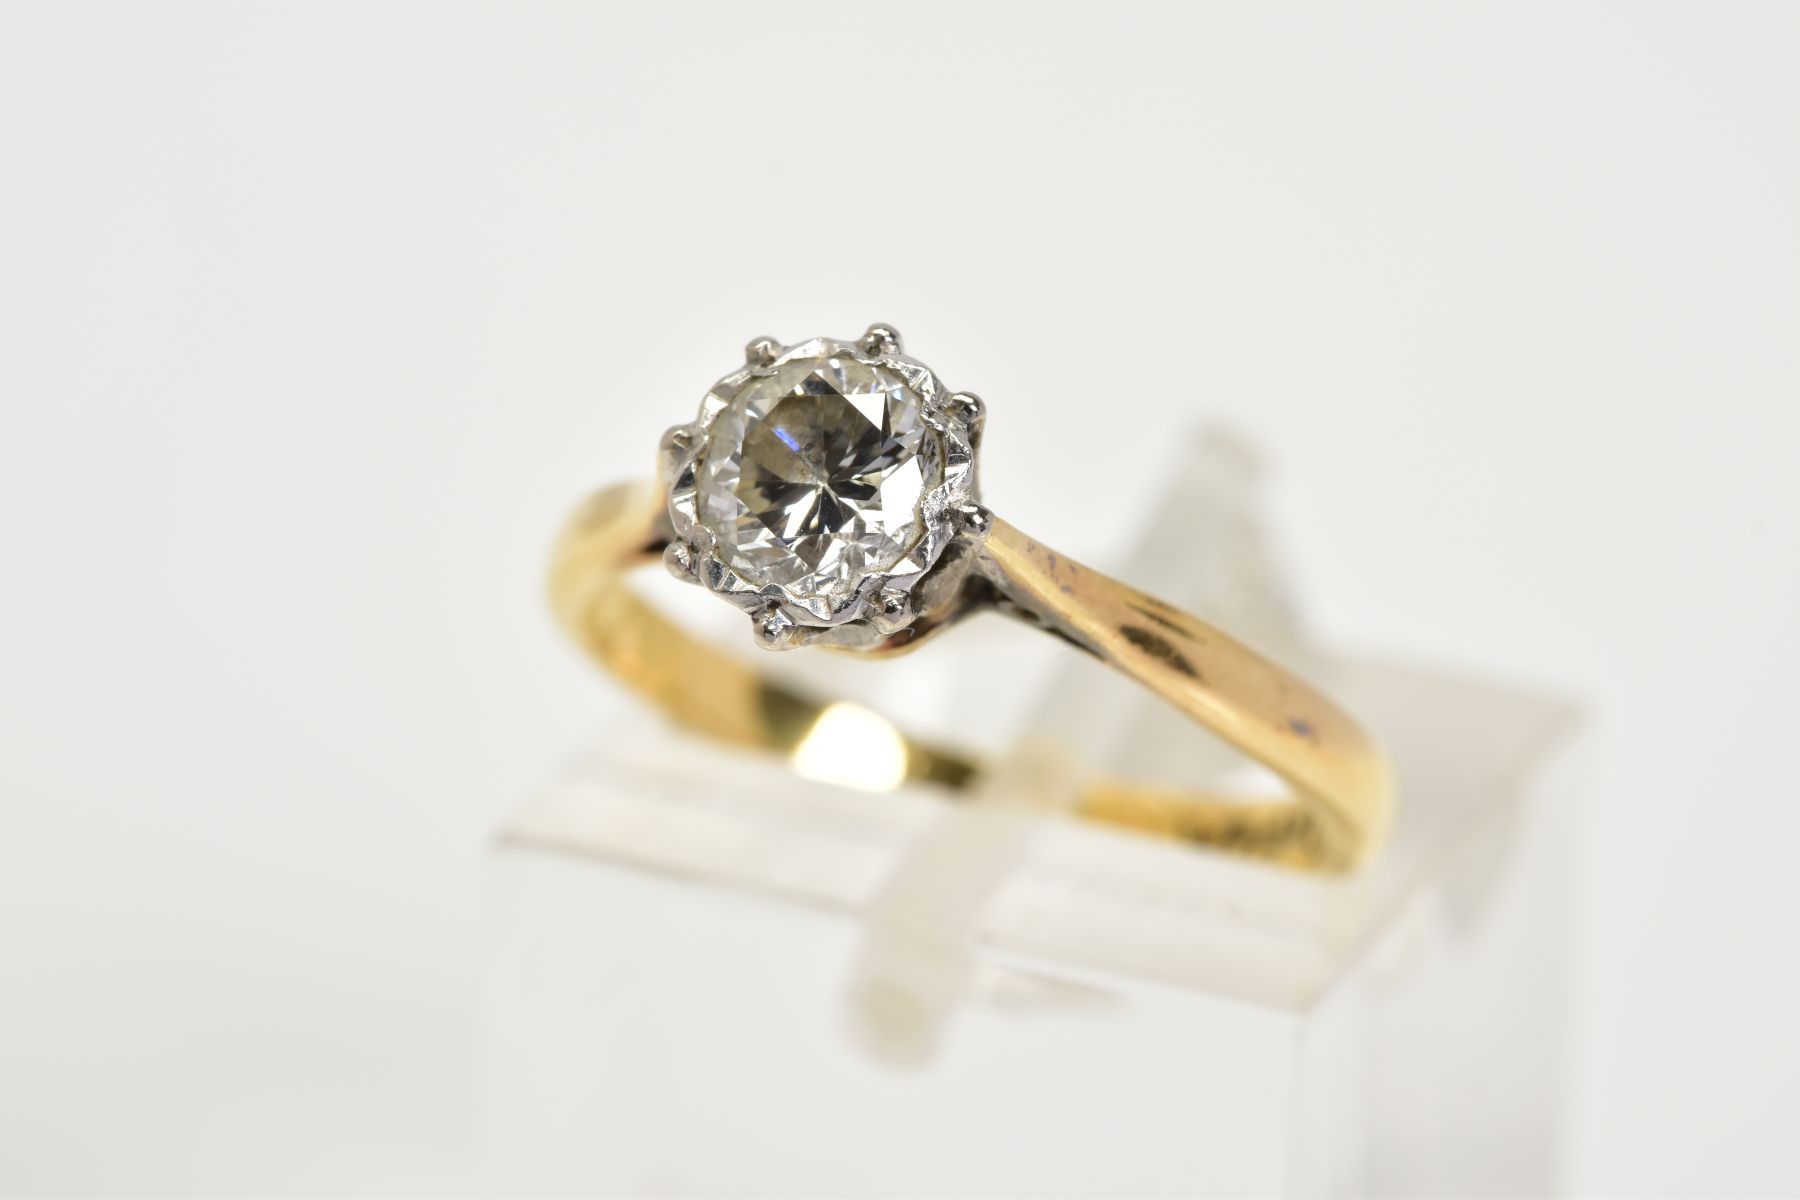 A SINGLE STONE DIAMOND RING, the yellow metal ring set with a single round brilliant cut diamond,